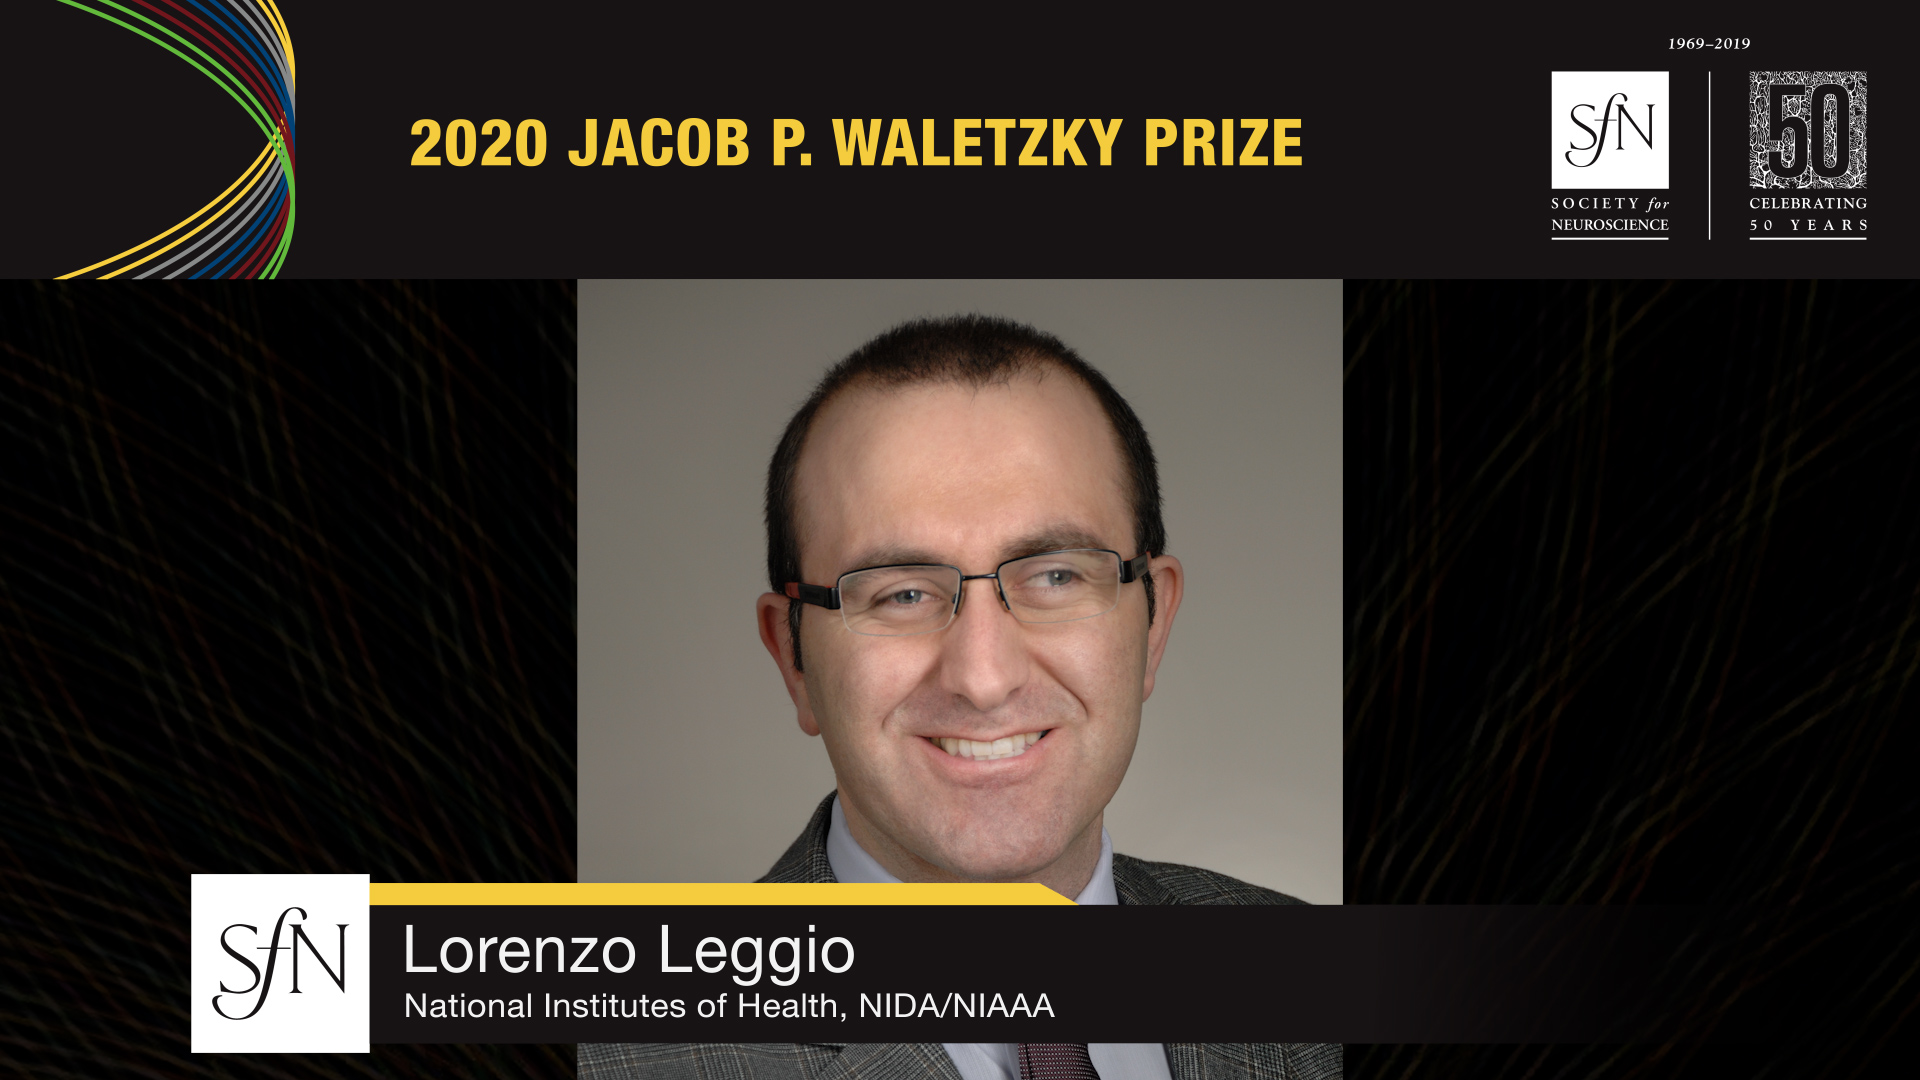 2020 Jacob P. Waletzky Prize award winner graphic, image of Lorenzo Leggio National Institutes of Health, NIDA/NIAAA